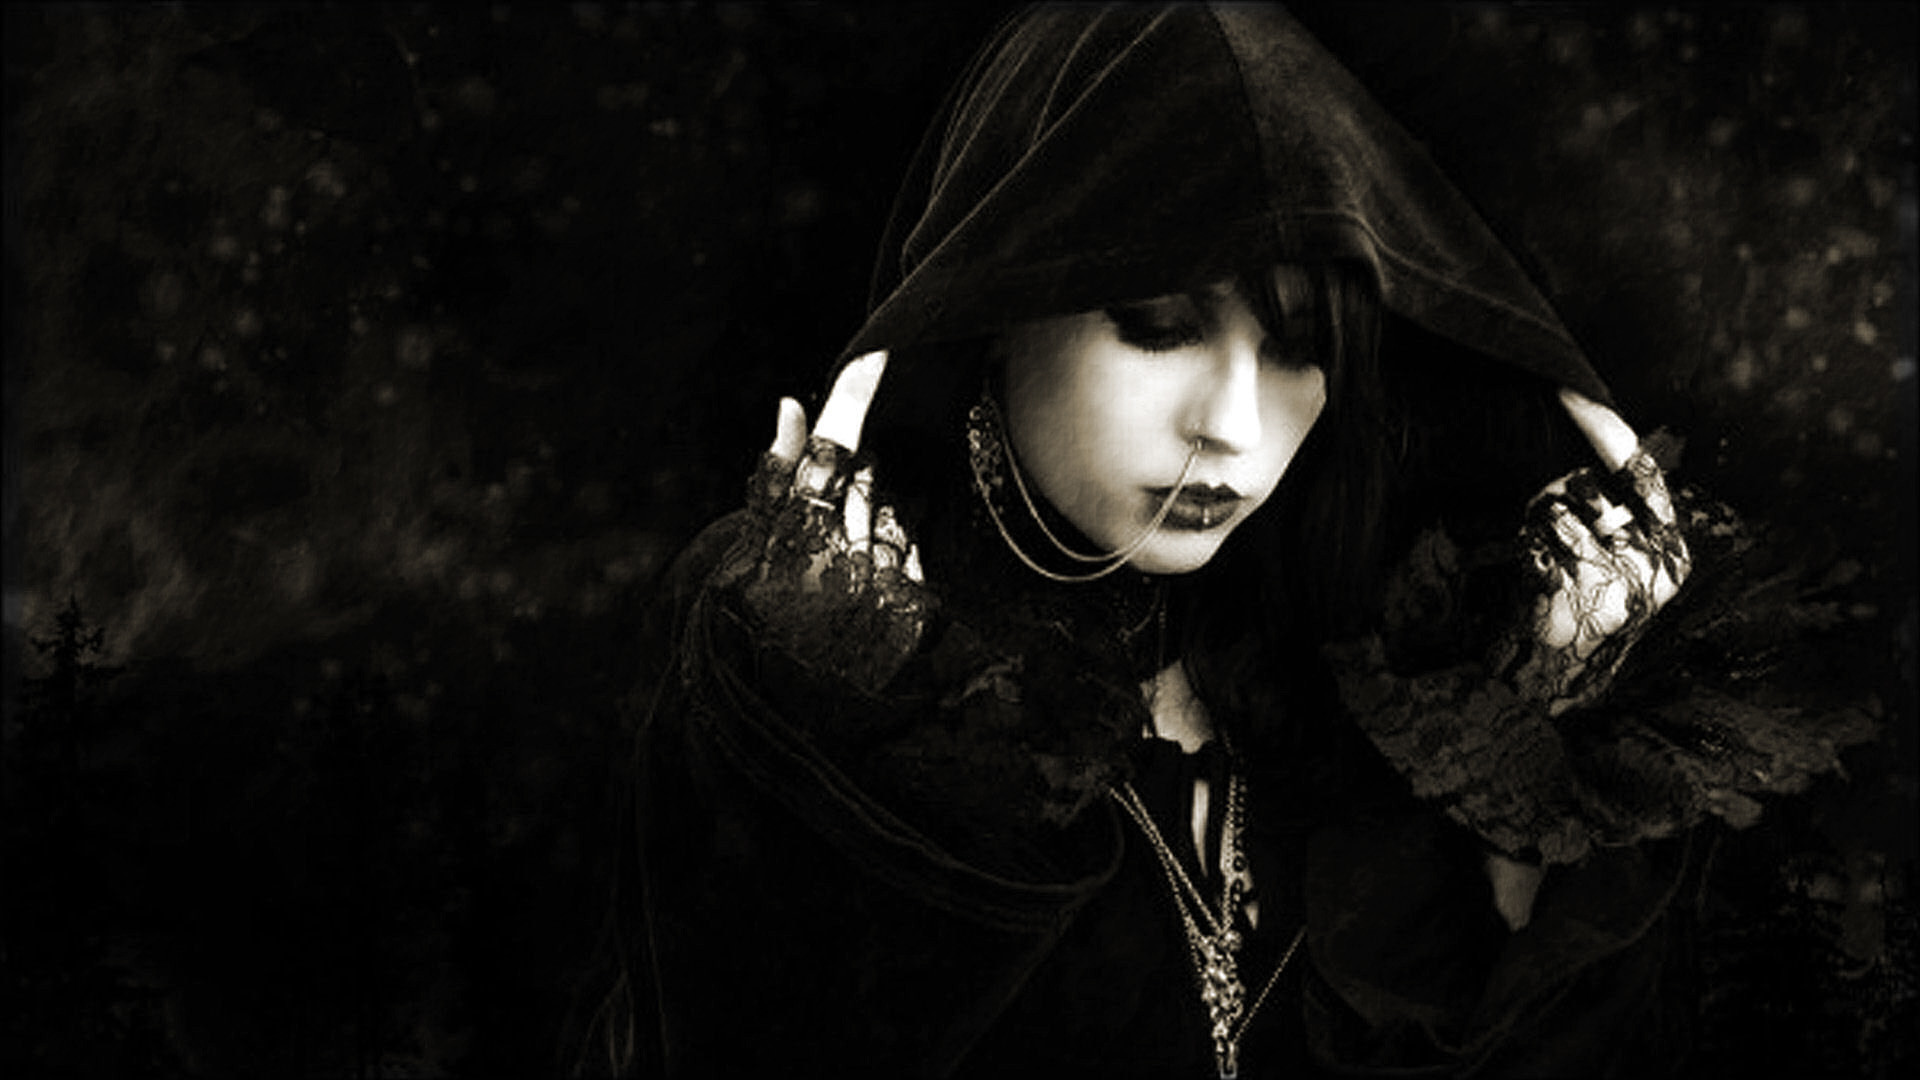 Gothic Goth Style Goth Loli Women Girl Dark Fantasy Witch F Wallpaper 1920x1080 168145 Wallpaperup 1920x1080